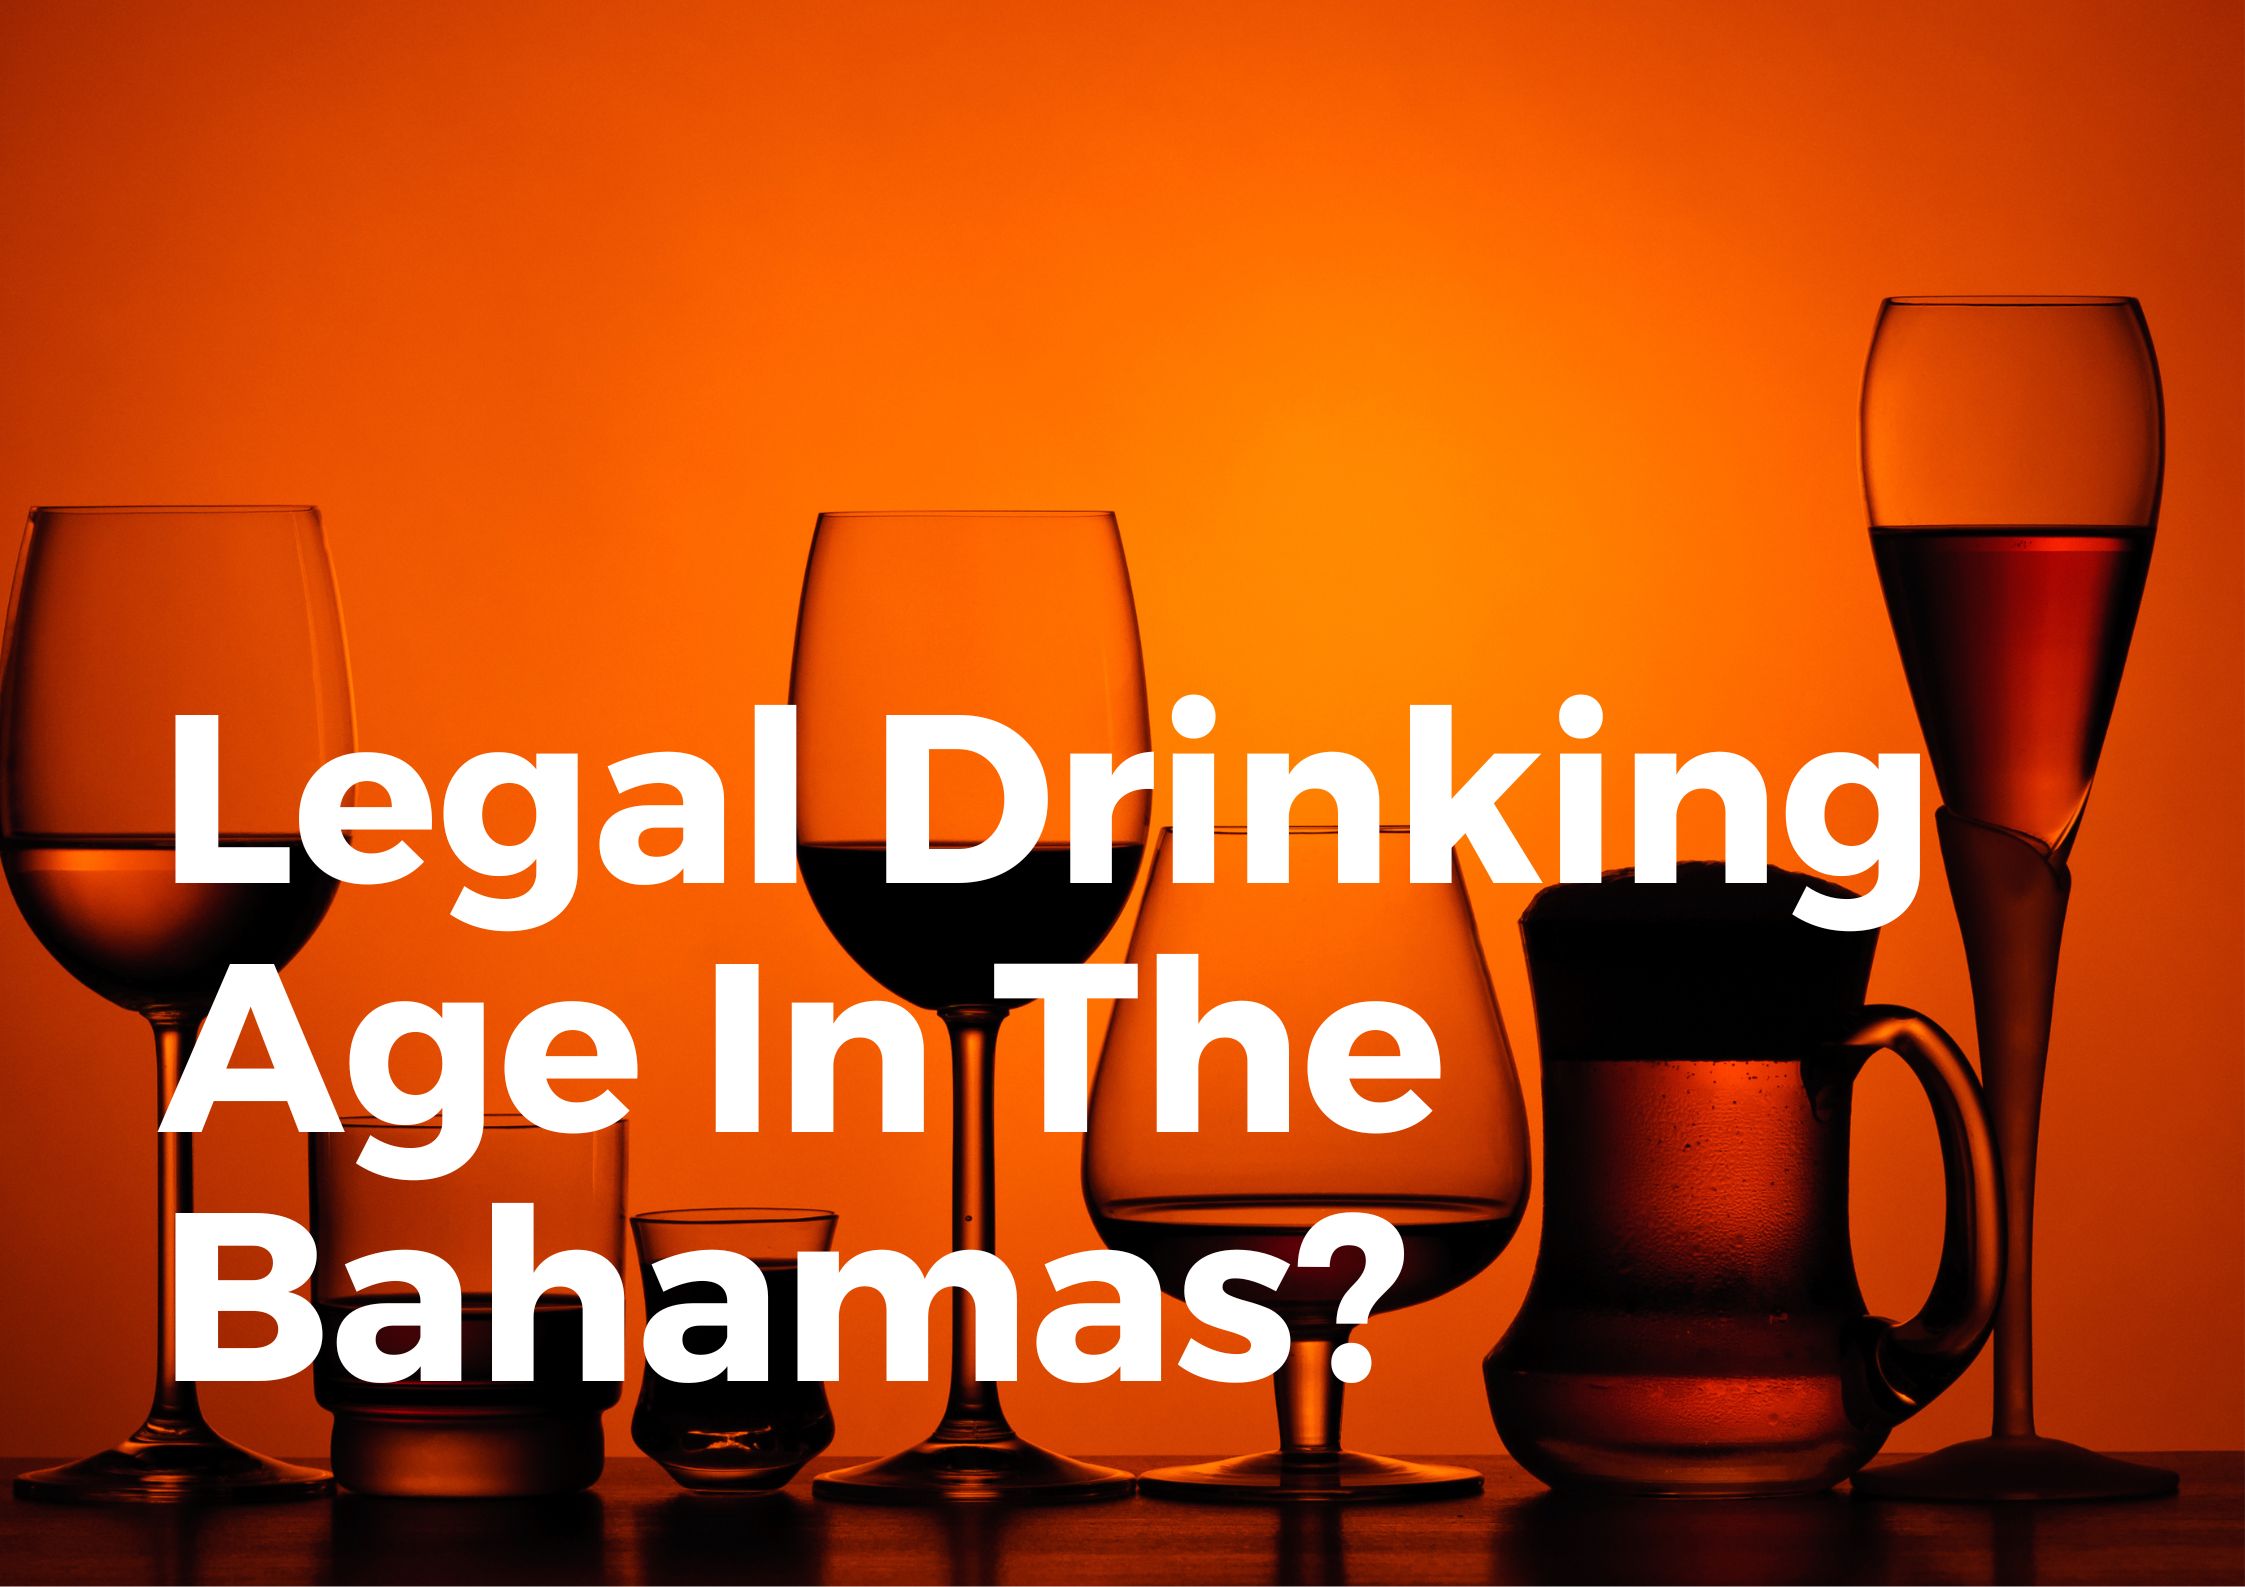 Bahamas drinking age?